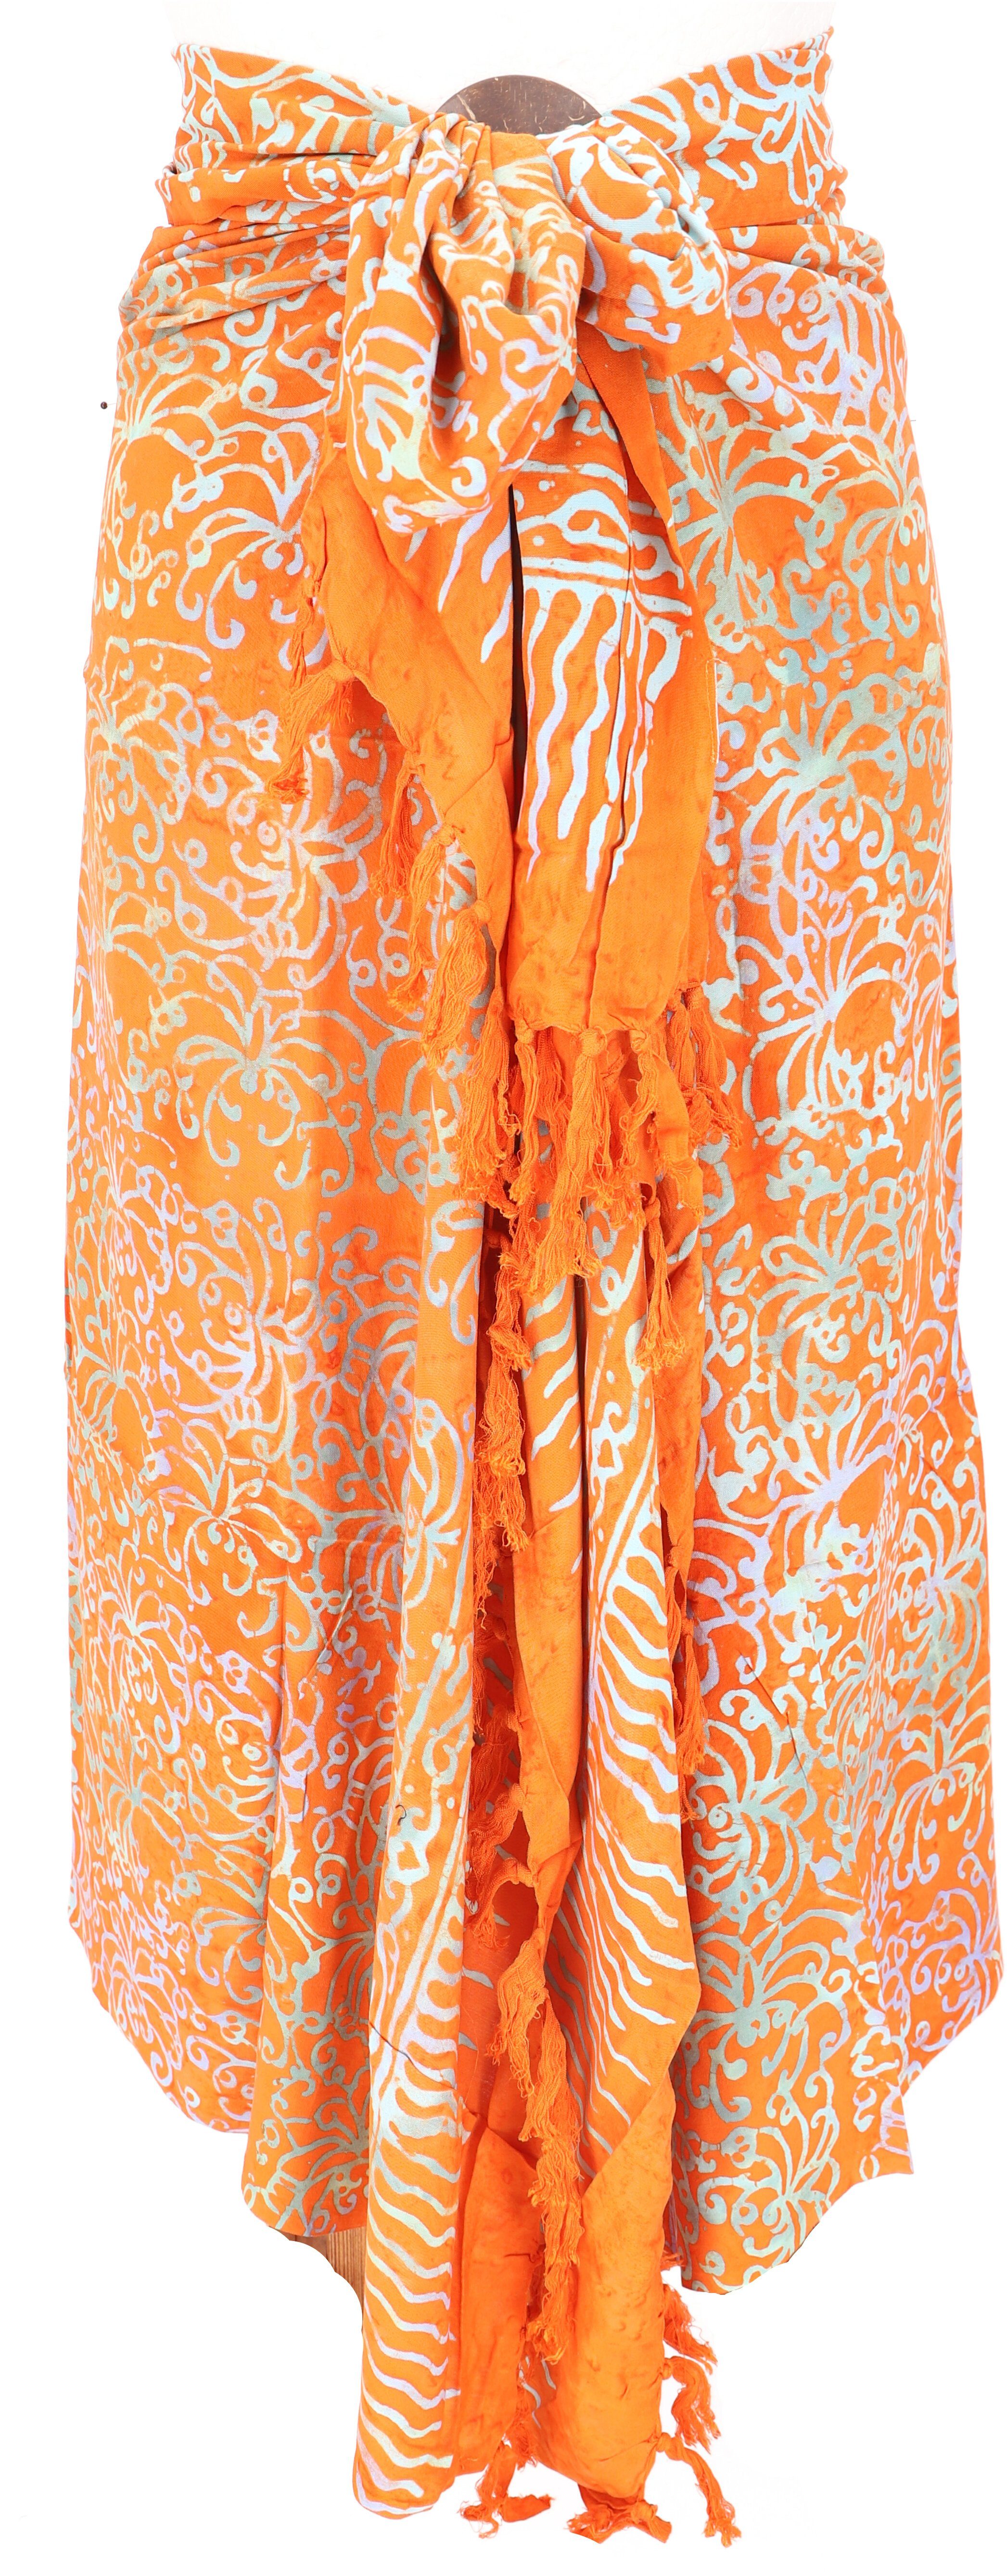 Guru-Shop Sarong Bali Batik Sarong, Wickelrock,.. 16/orange Design Wandbehang